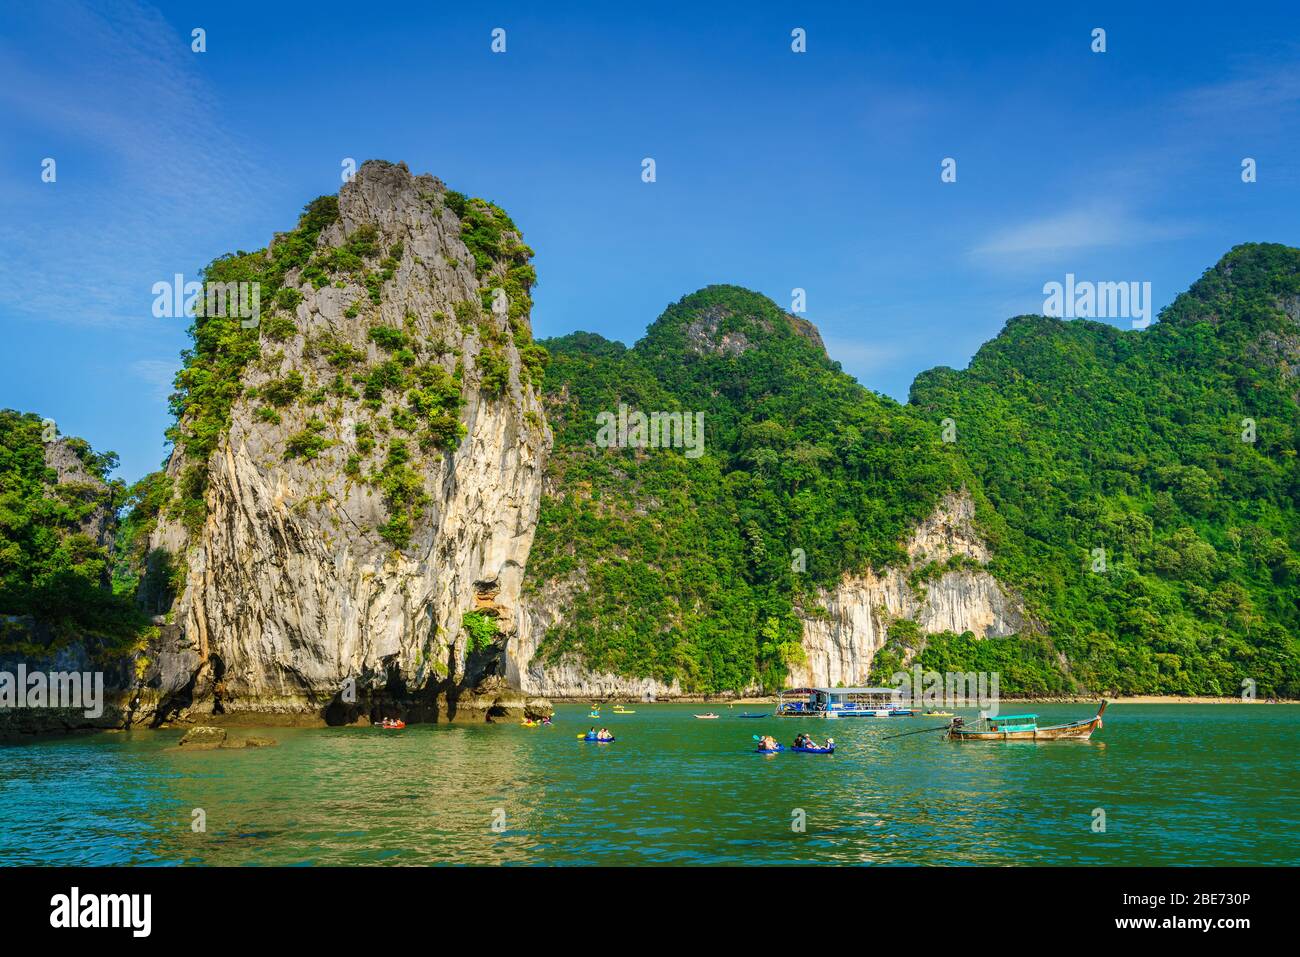 Koh Hong island, Thailand, November 5, 2017: tour boats and kayaks by Koh Hong island - a popular tourist destination in Krabi, Thailand Stock Photo